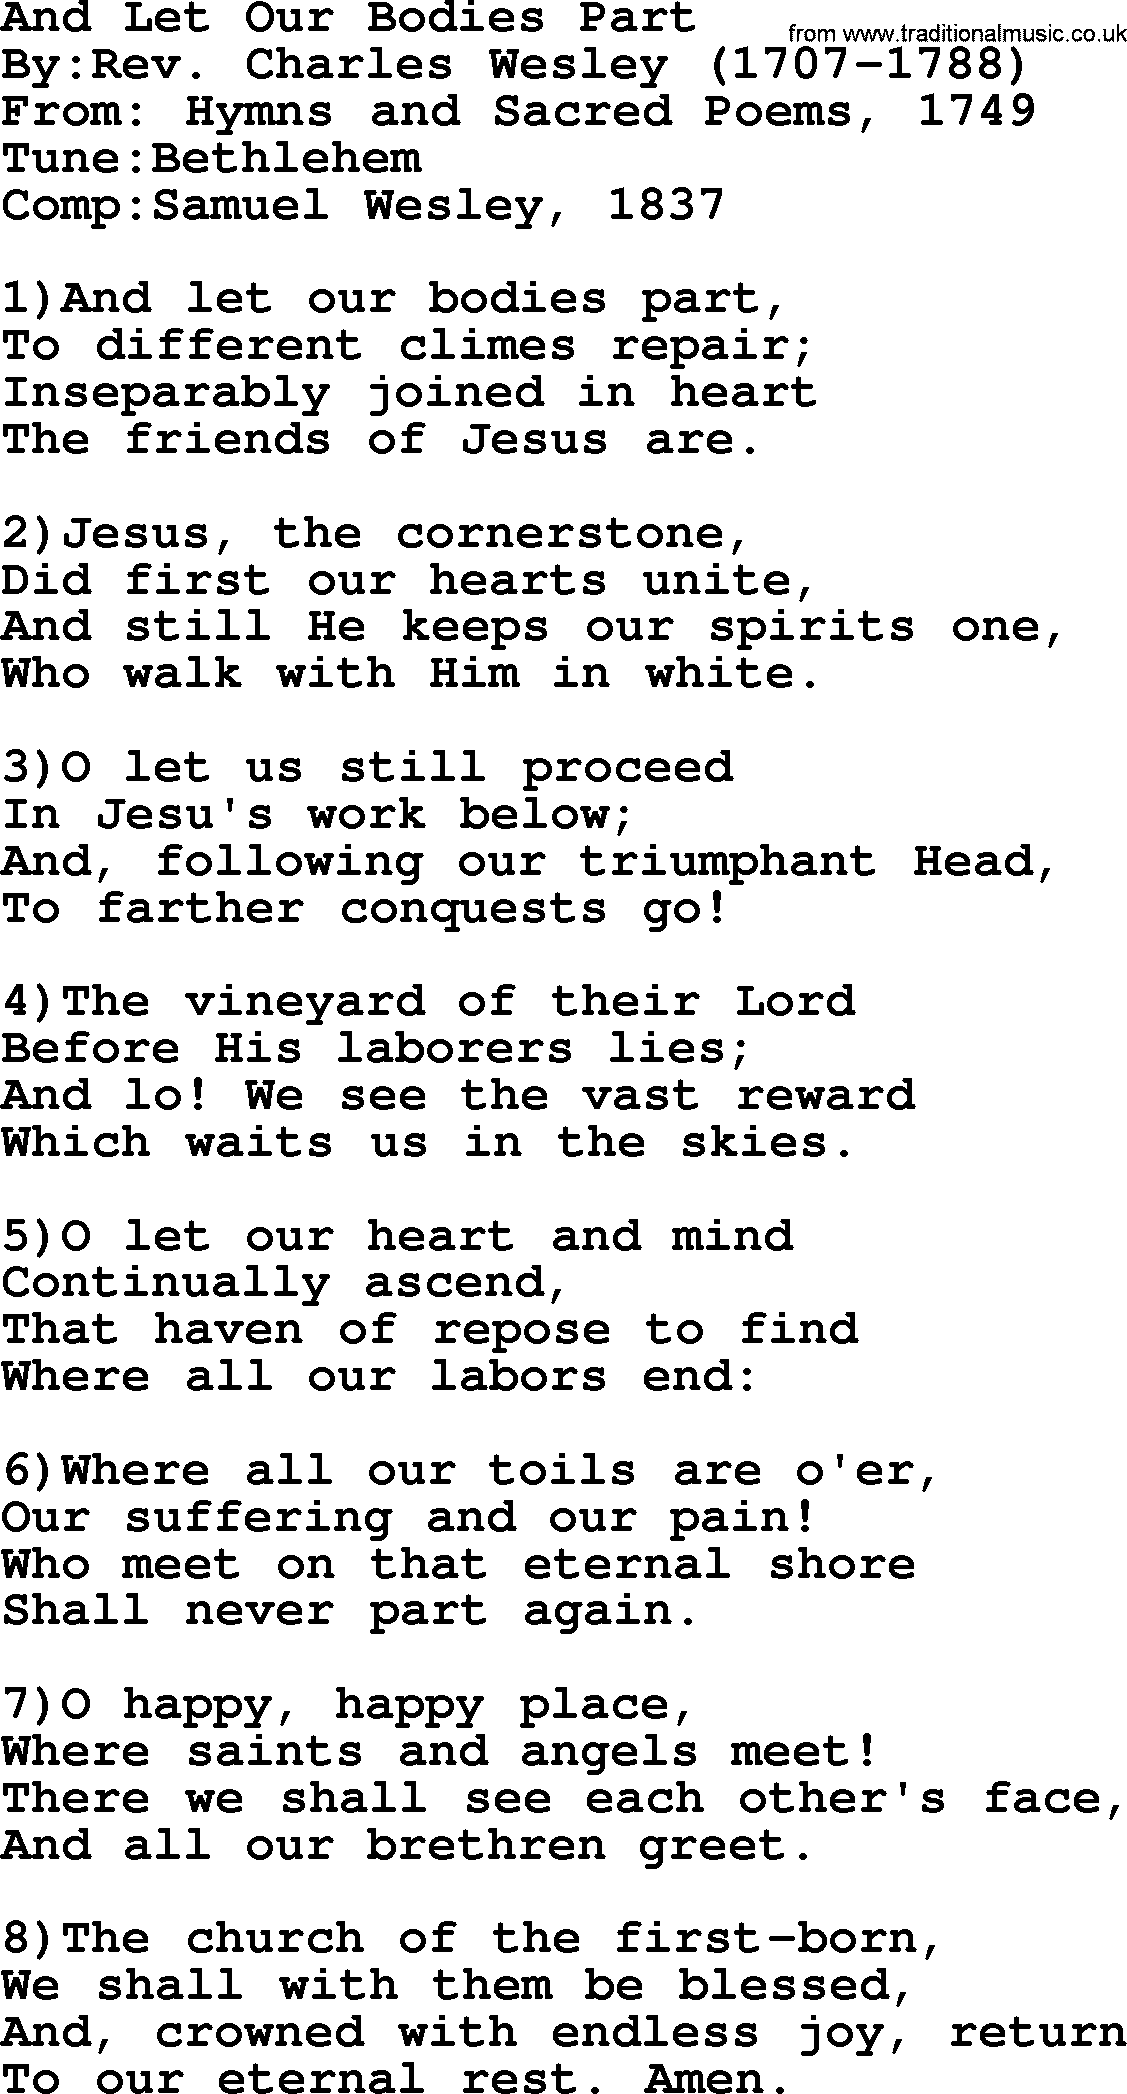 Methodist Hymn: And Let Our Bodies Part, lyrics